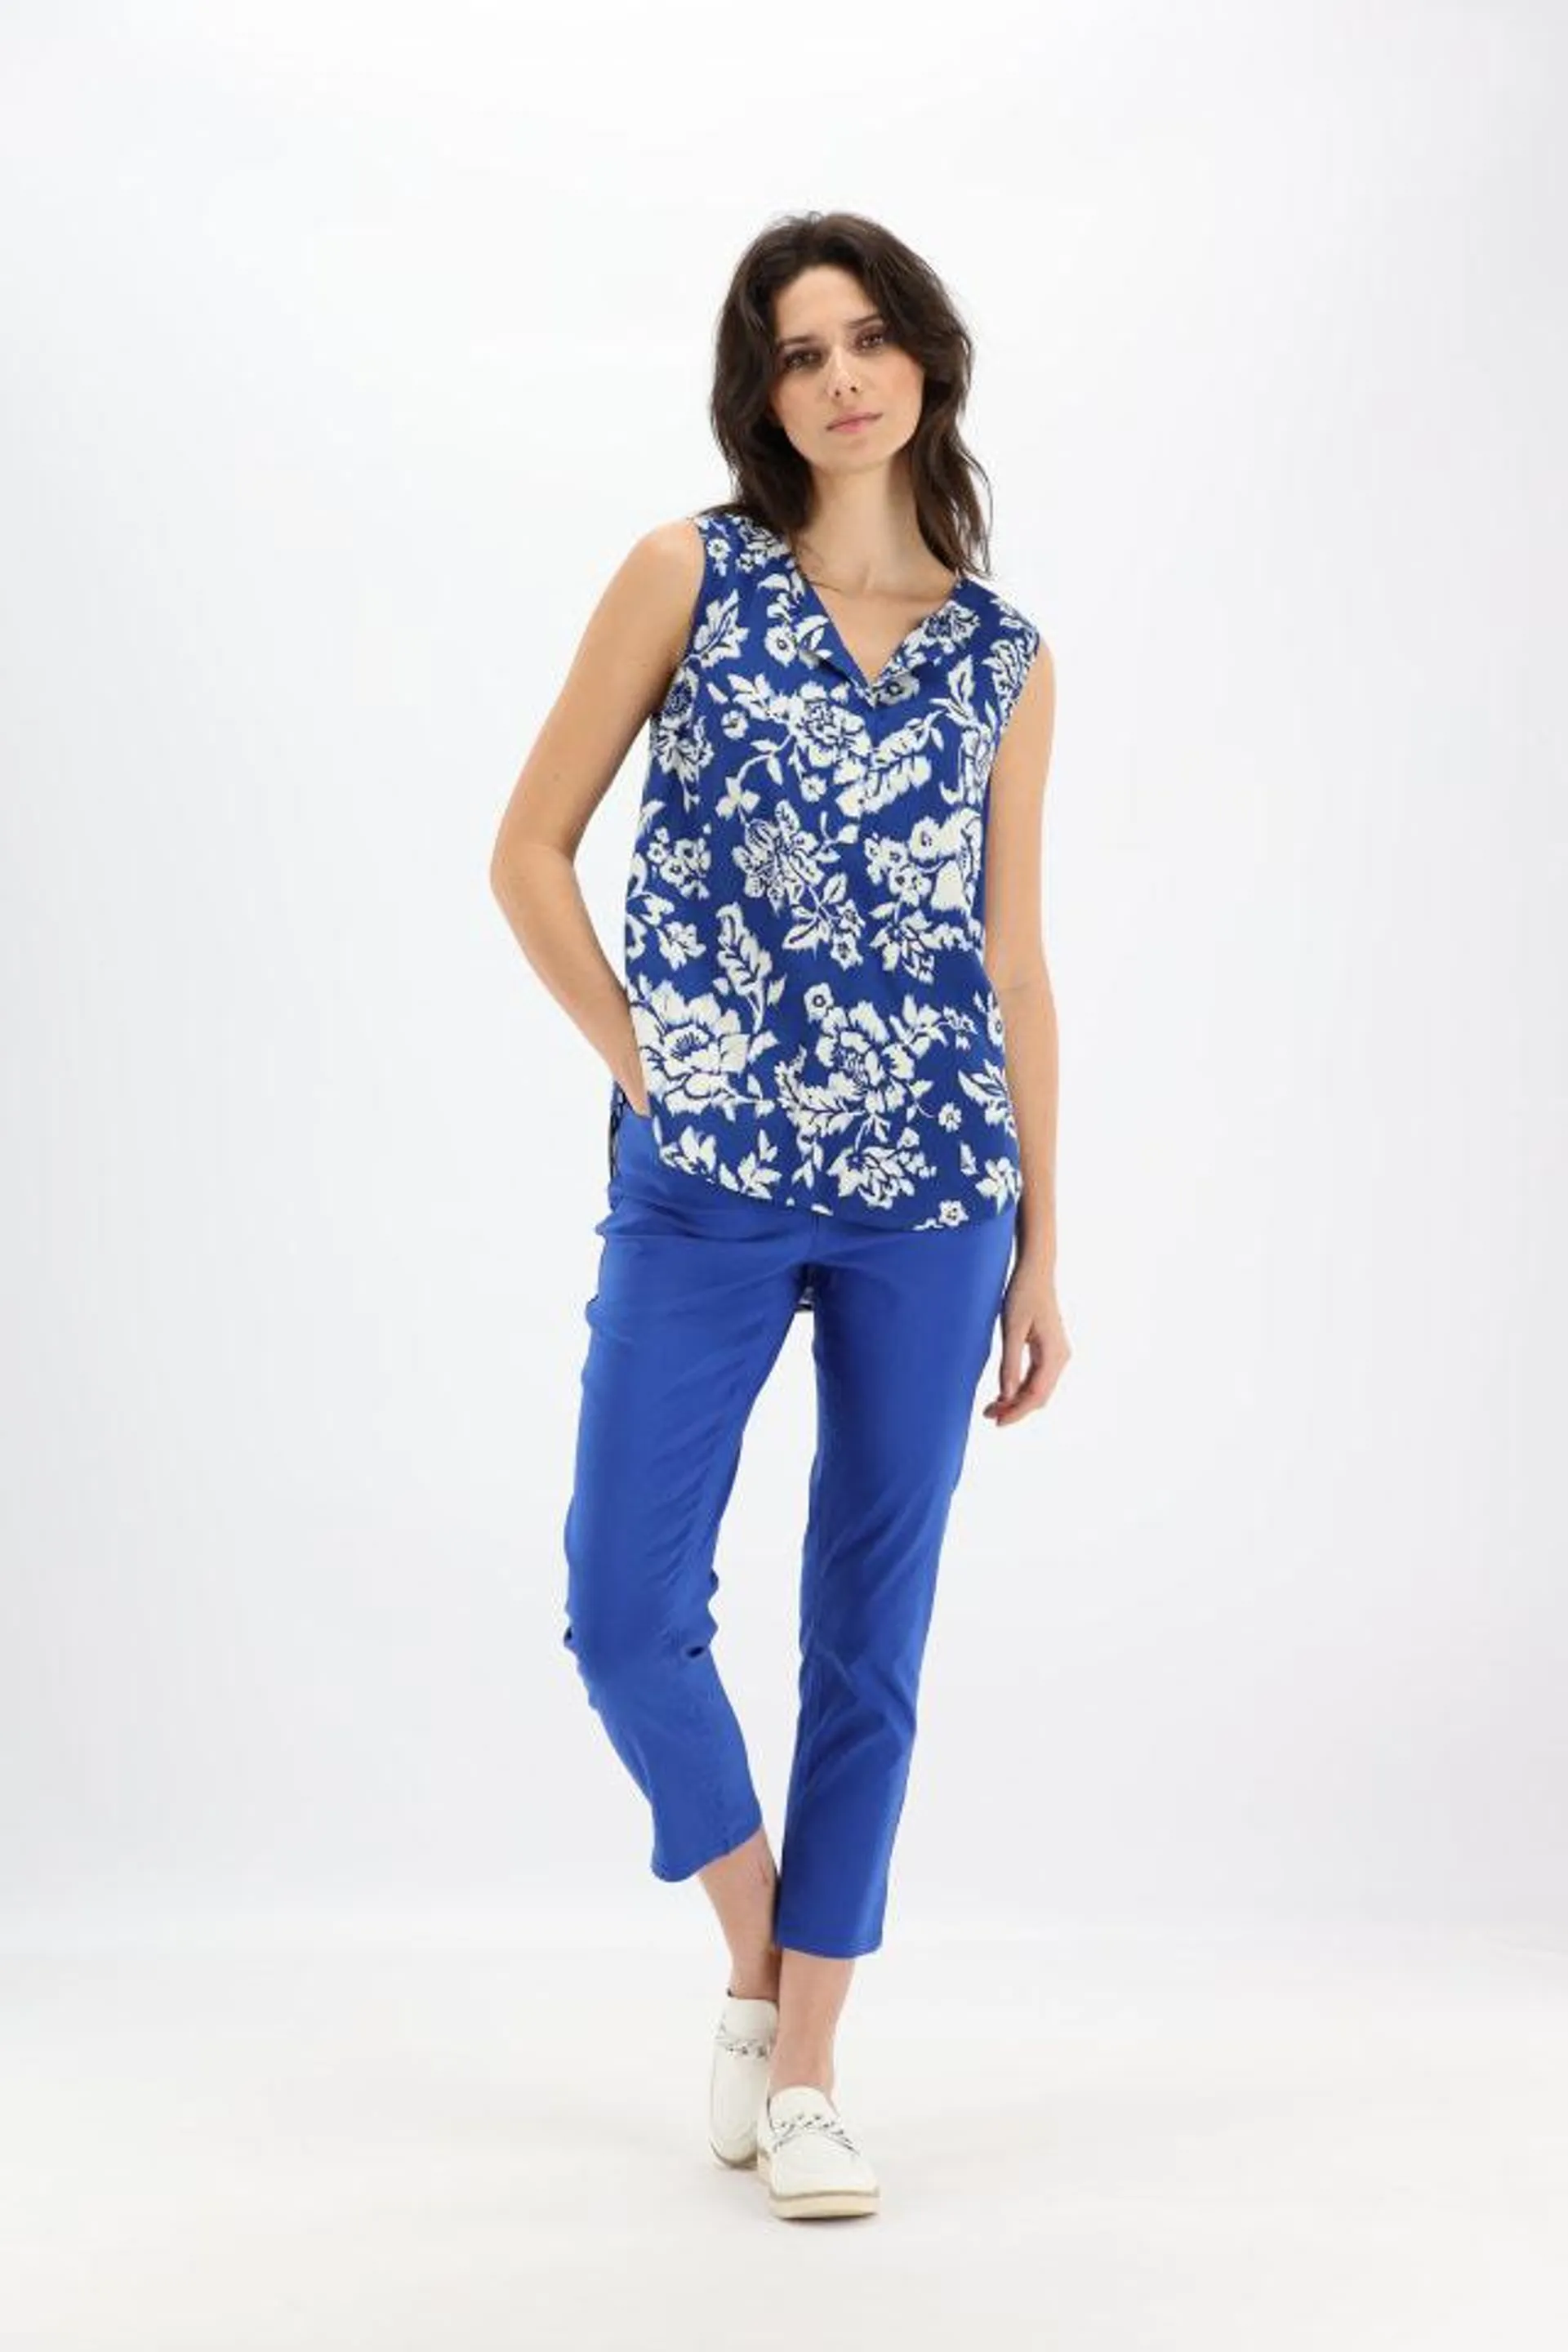 Kobaltblauw/witte fleurige blouse zonder mouwen